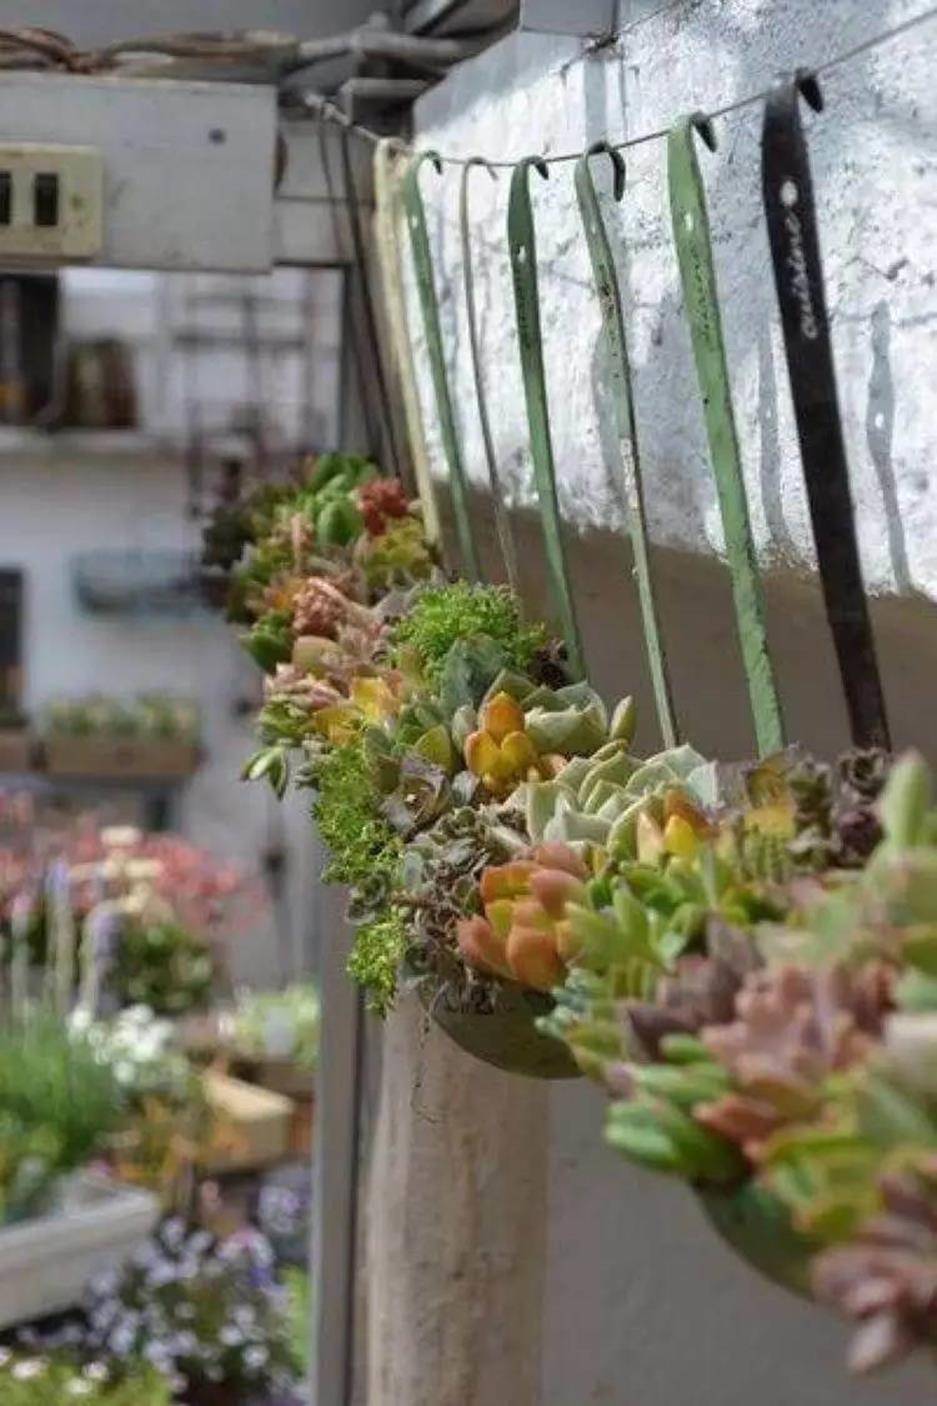 Upcycled Garden Decor Ideas